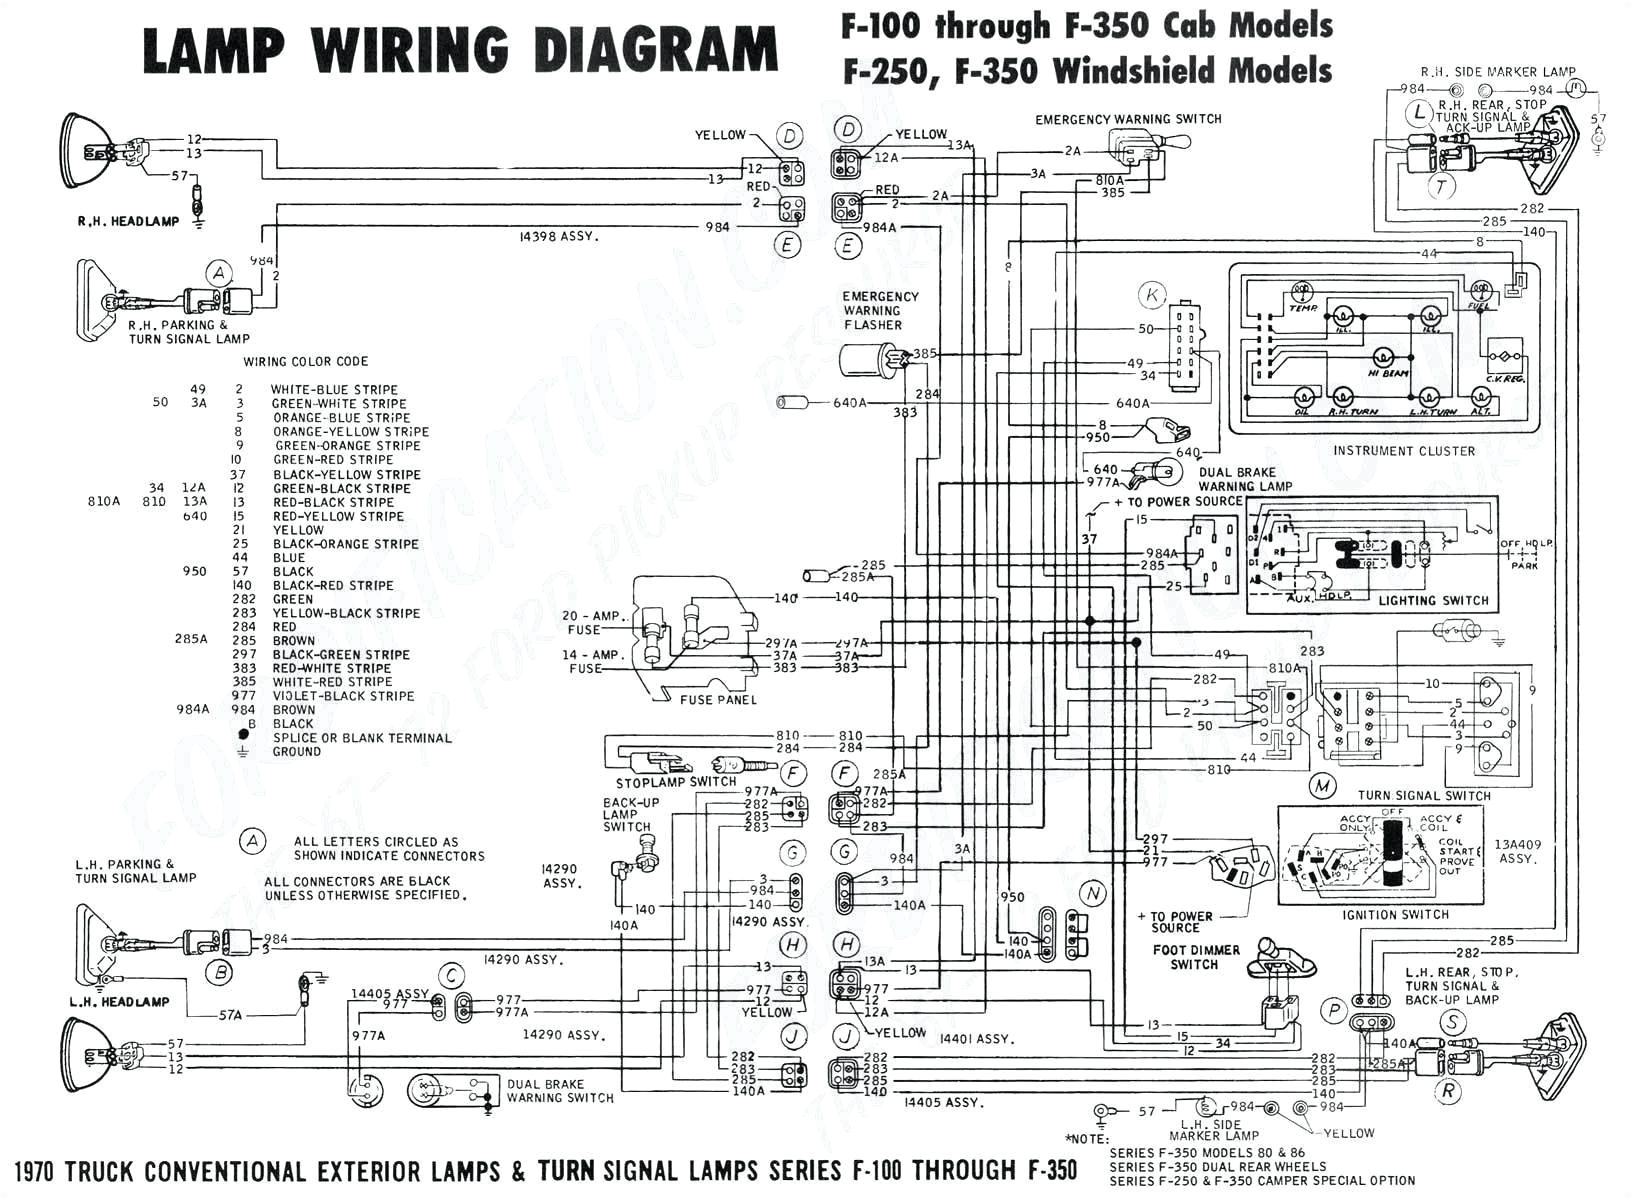 wiring diagram furthermore black and white electrical wires likewise diagram furthermore 1957 chevy fuse panel diagram